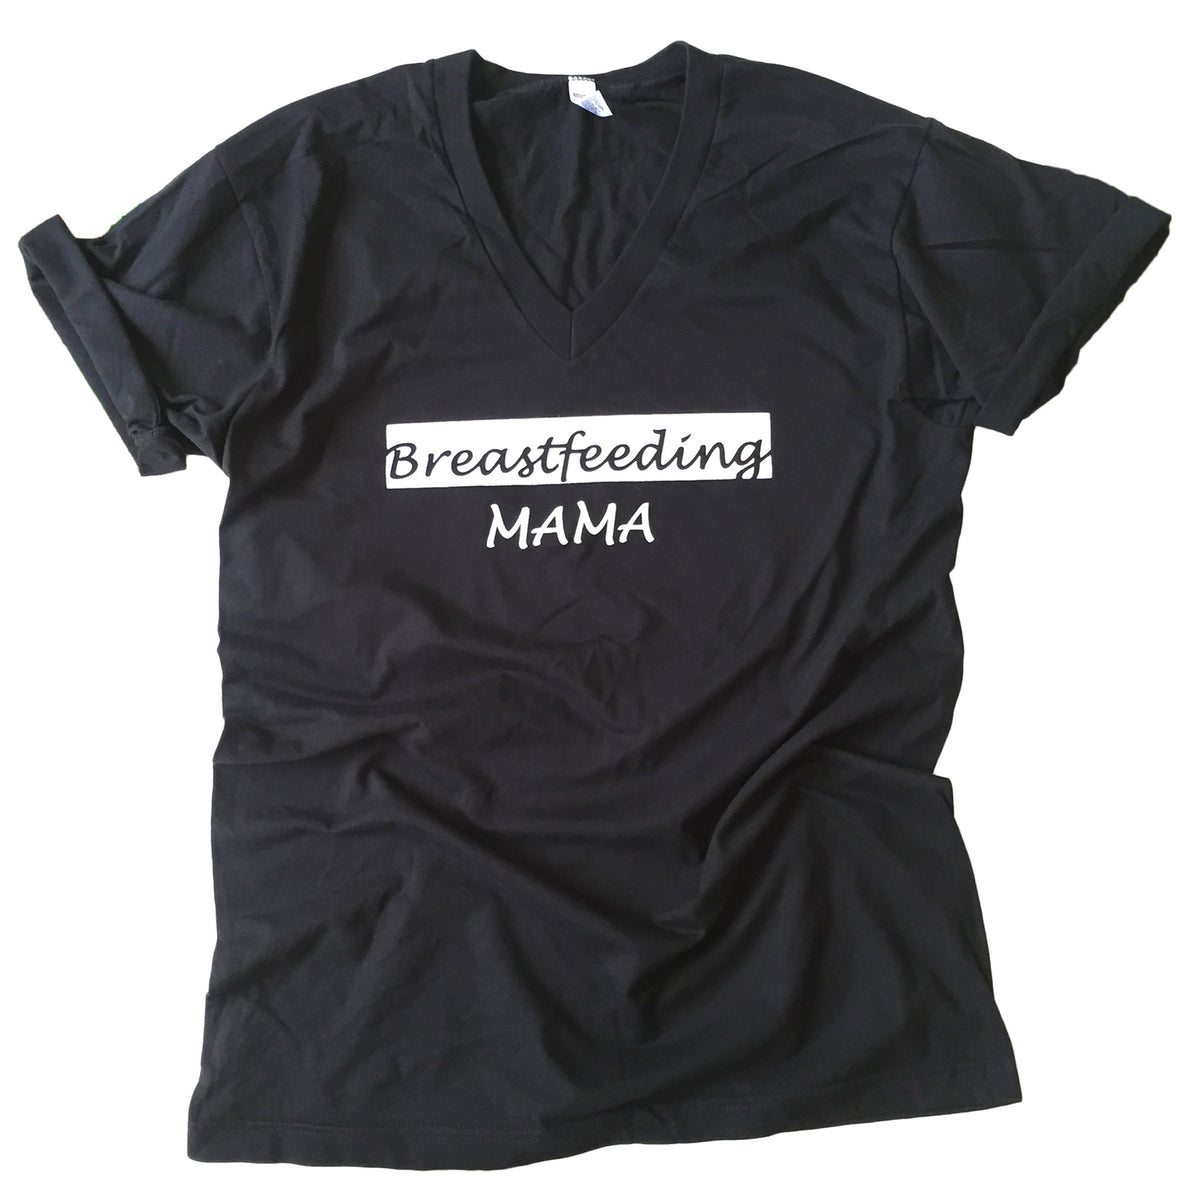 "Breastfeeding MAMA" T-shirt